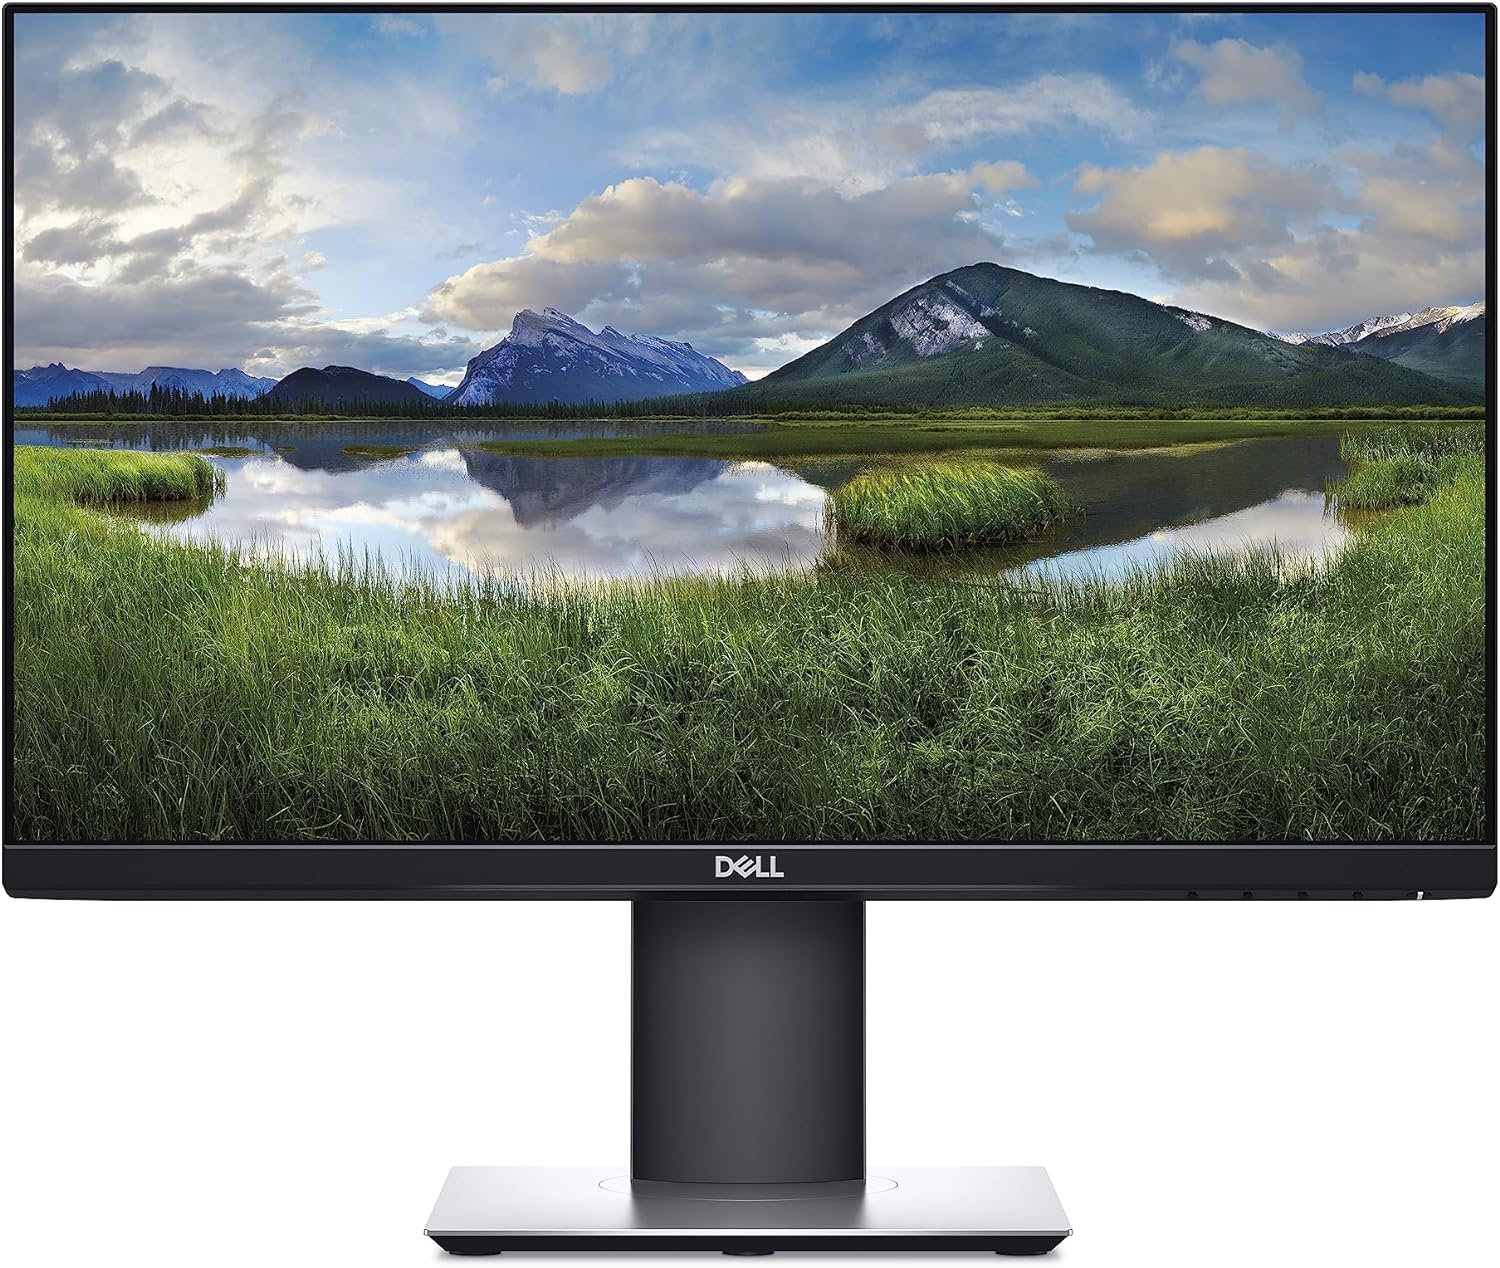 Dell P2219H-B 22" 16:9 Ultrathin Bezel TAA Compliant IPS Monitor - B stock Refurbished